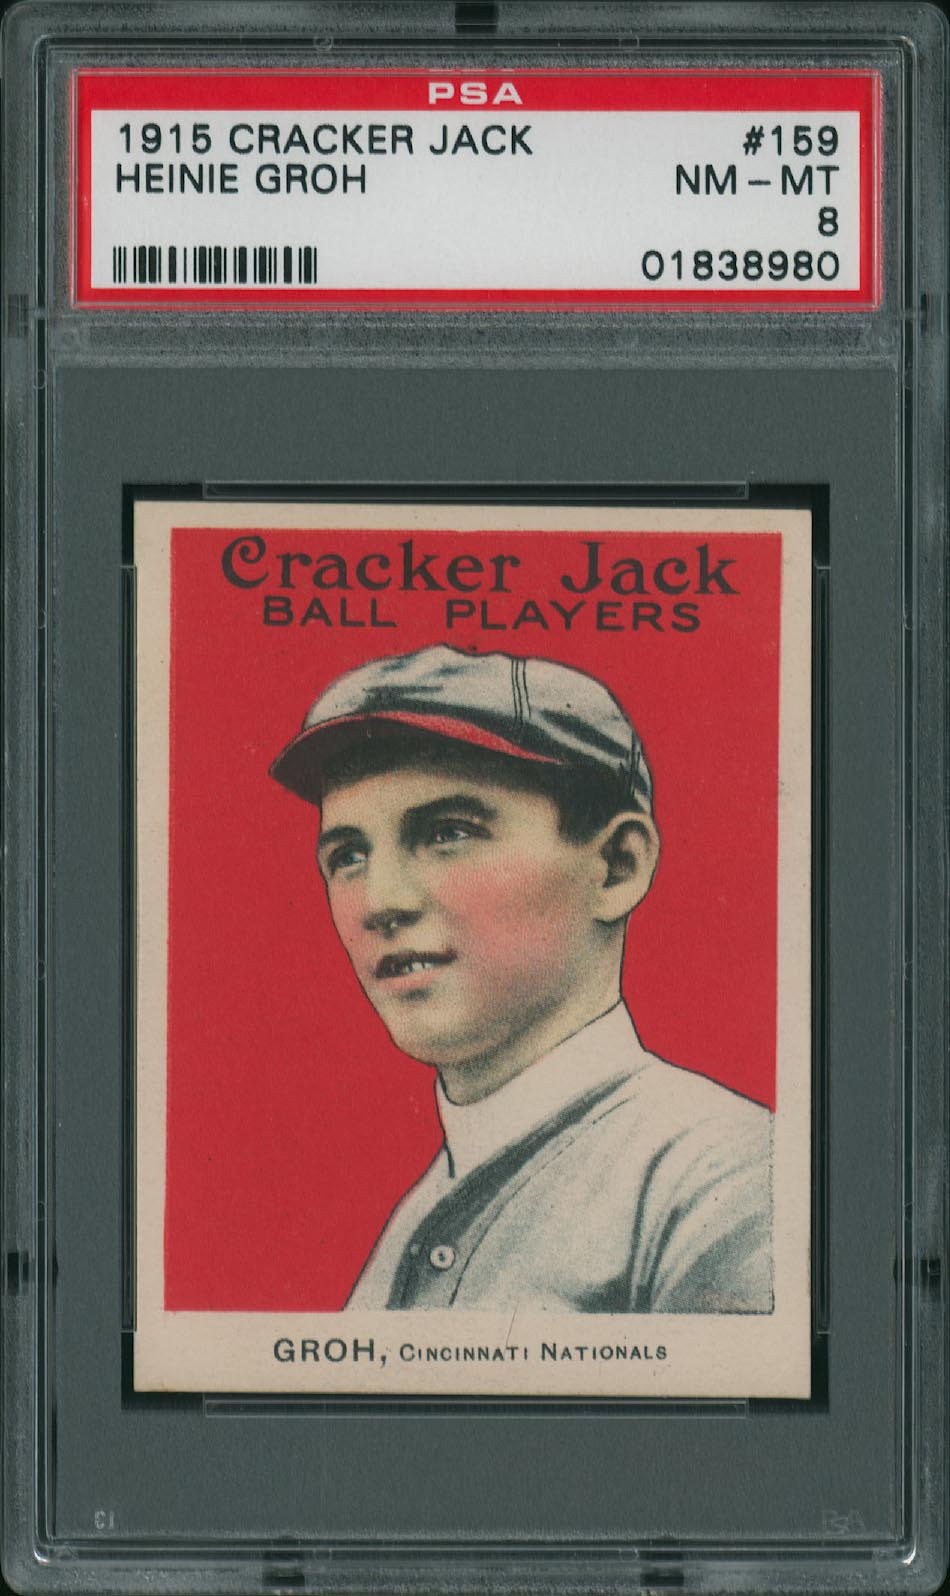  1915 Cracker Jack #159 Heinie Groh - PSA NM-MT 8 - Just 3 Higher!